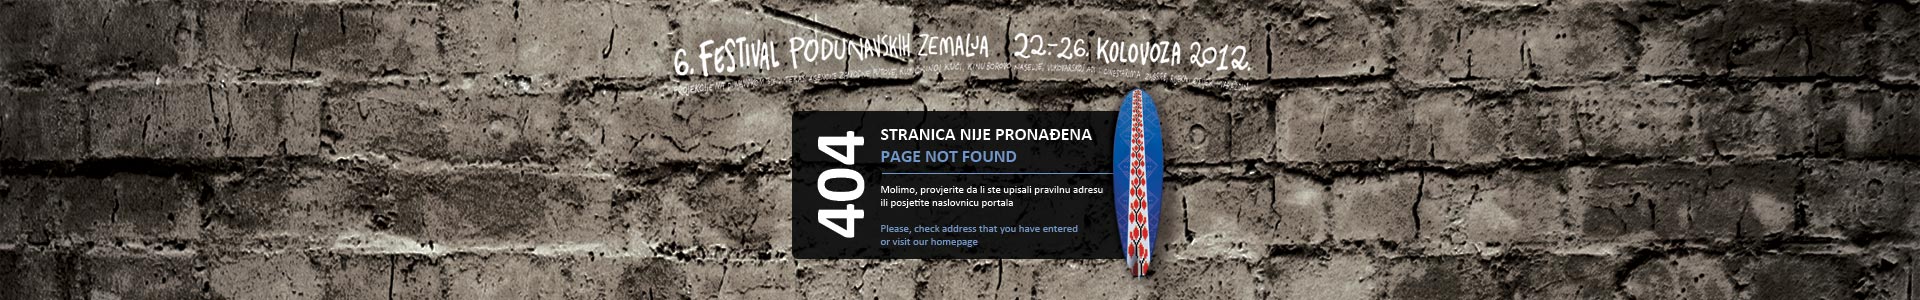 6. Vukovar film festival - festival podunavskih zemalja